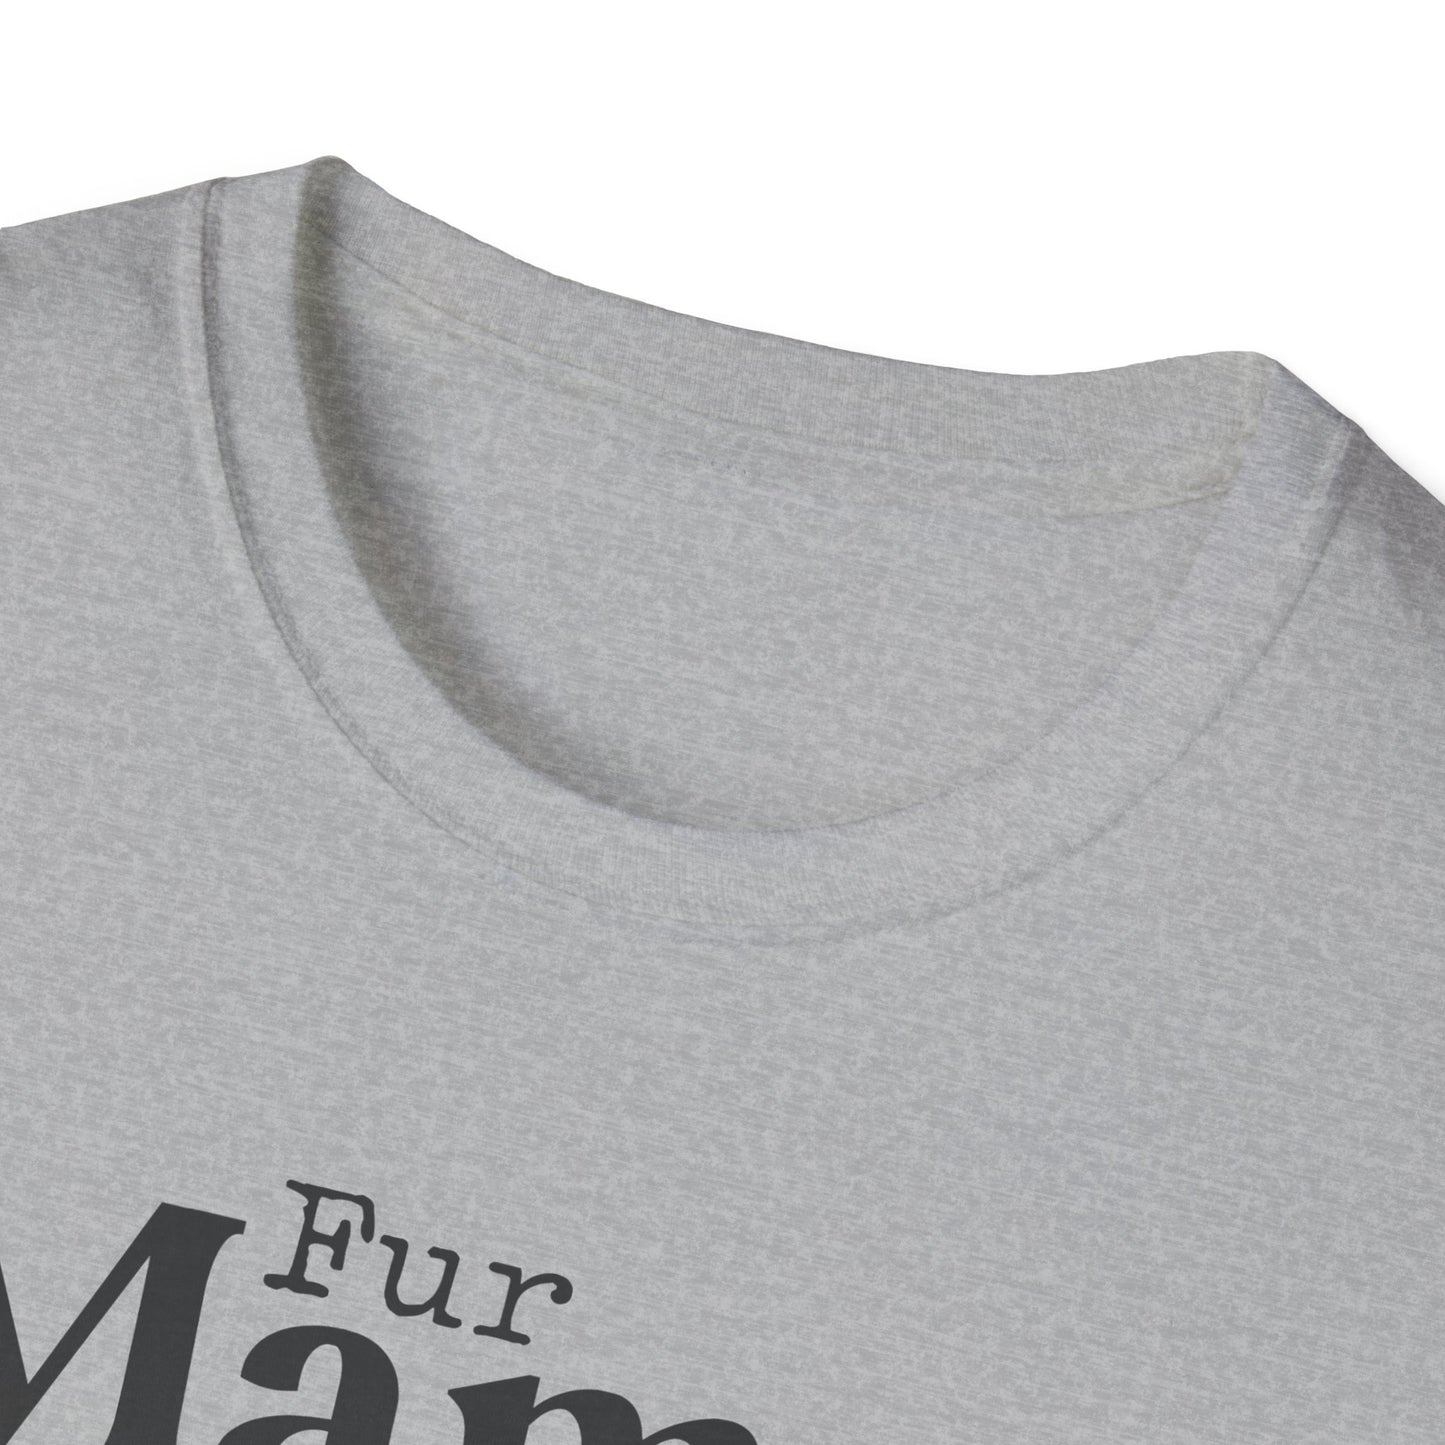 Fur Mama Mode - Unisex Softstyle T-Shirt